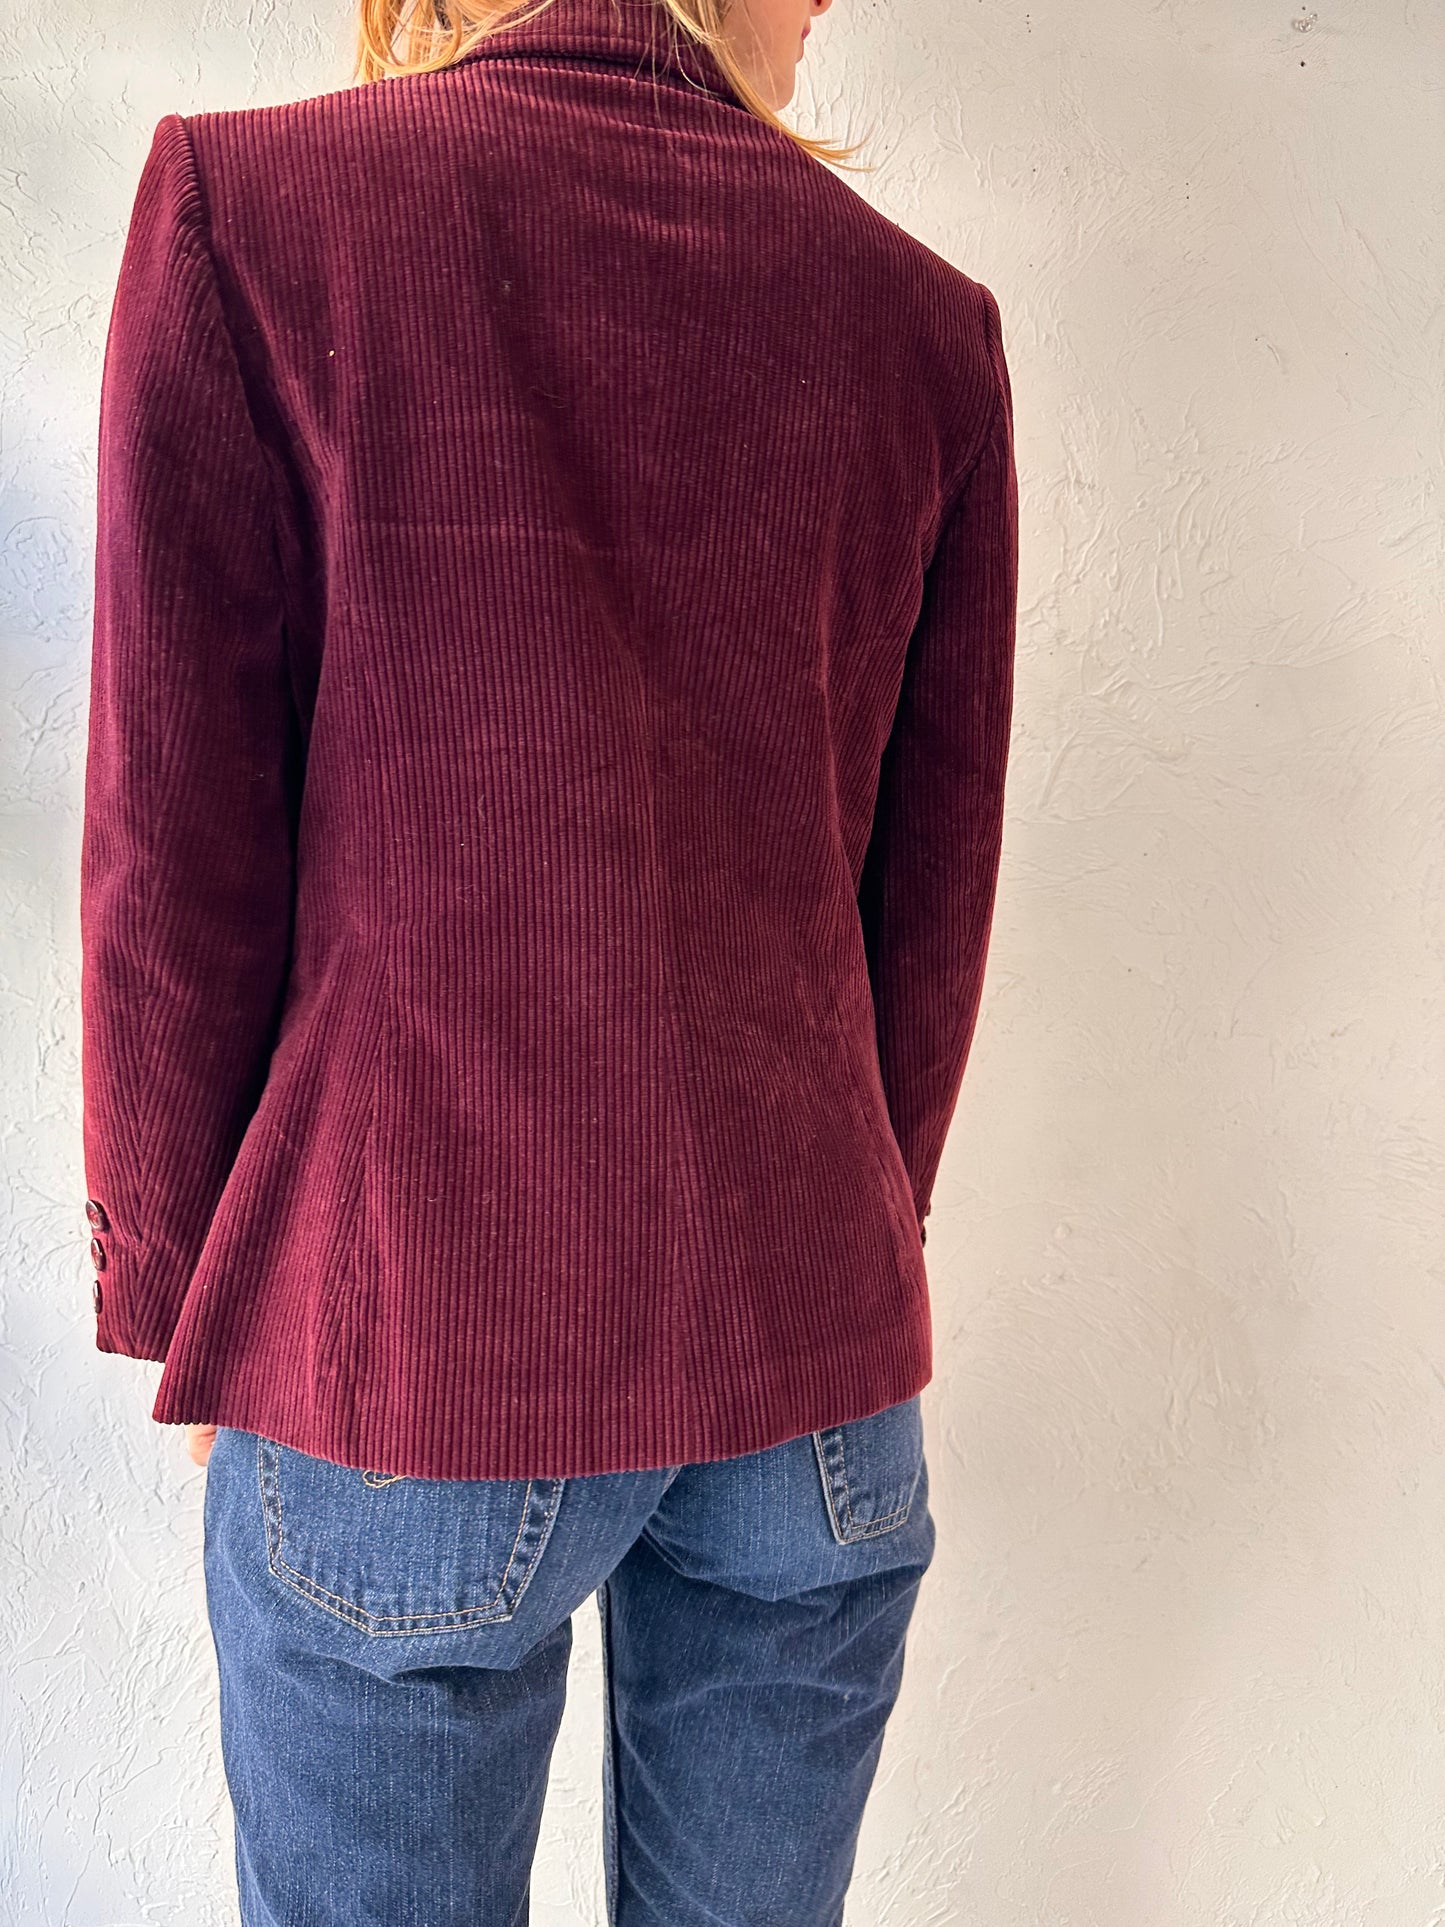 Vintage Burgundy Corduroy Blazer Jacket / Medium